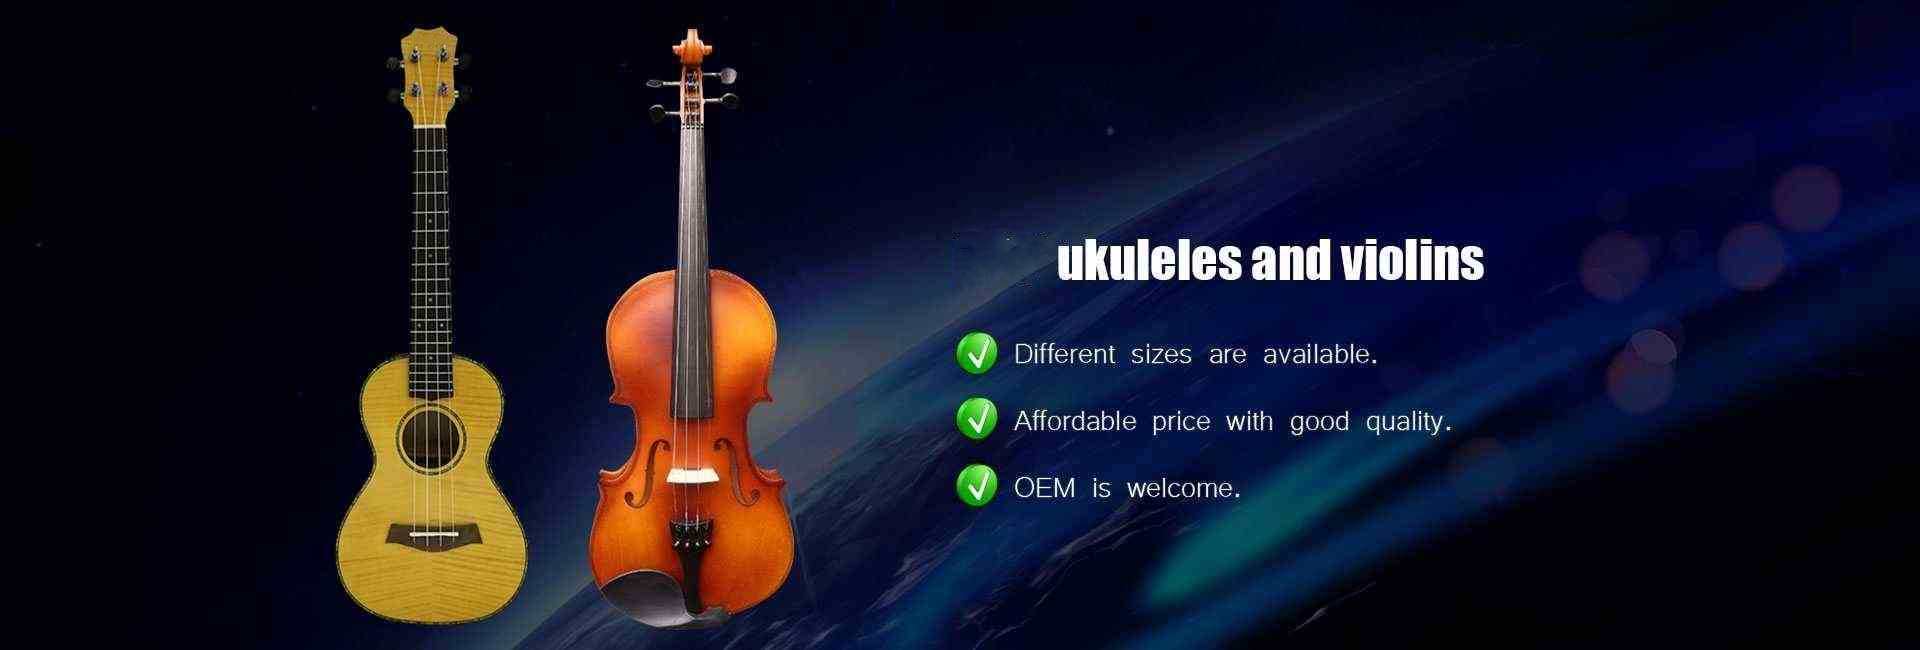 GZ HANSI’ ukuleles and violins